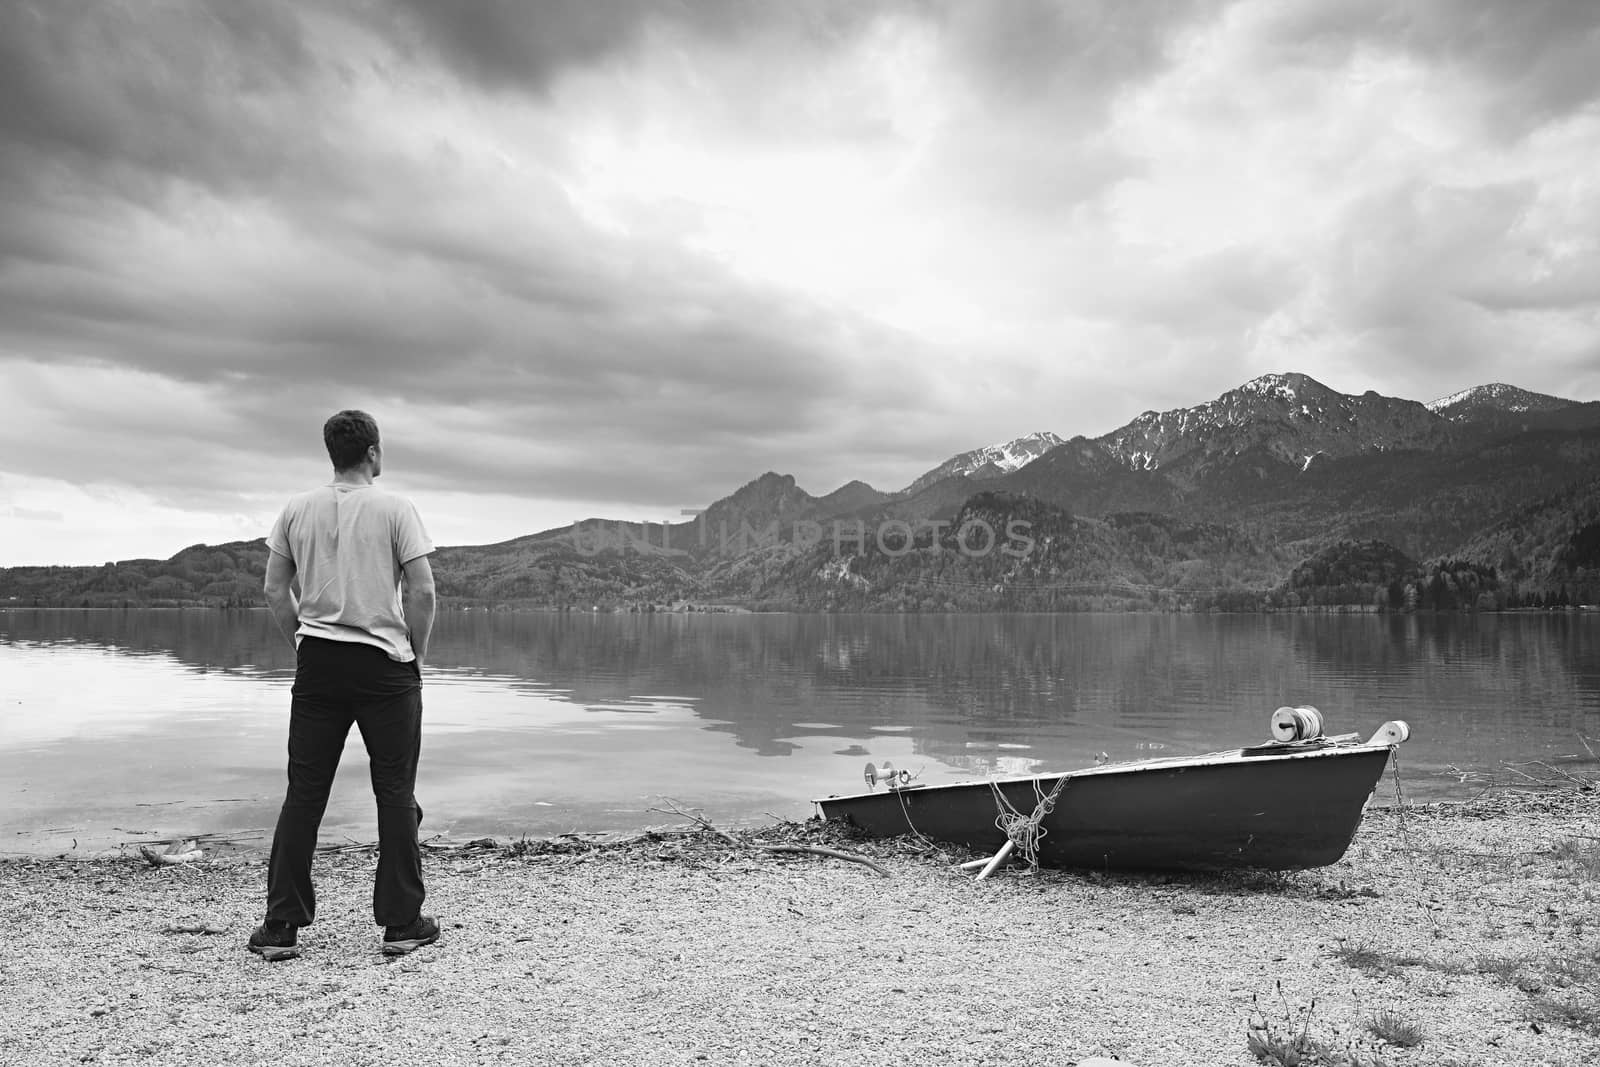 Adult man in blue shirt walk at old fishing paddle boat at mountains lake coast. Vintage photo effect by rdonar2